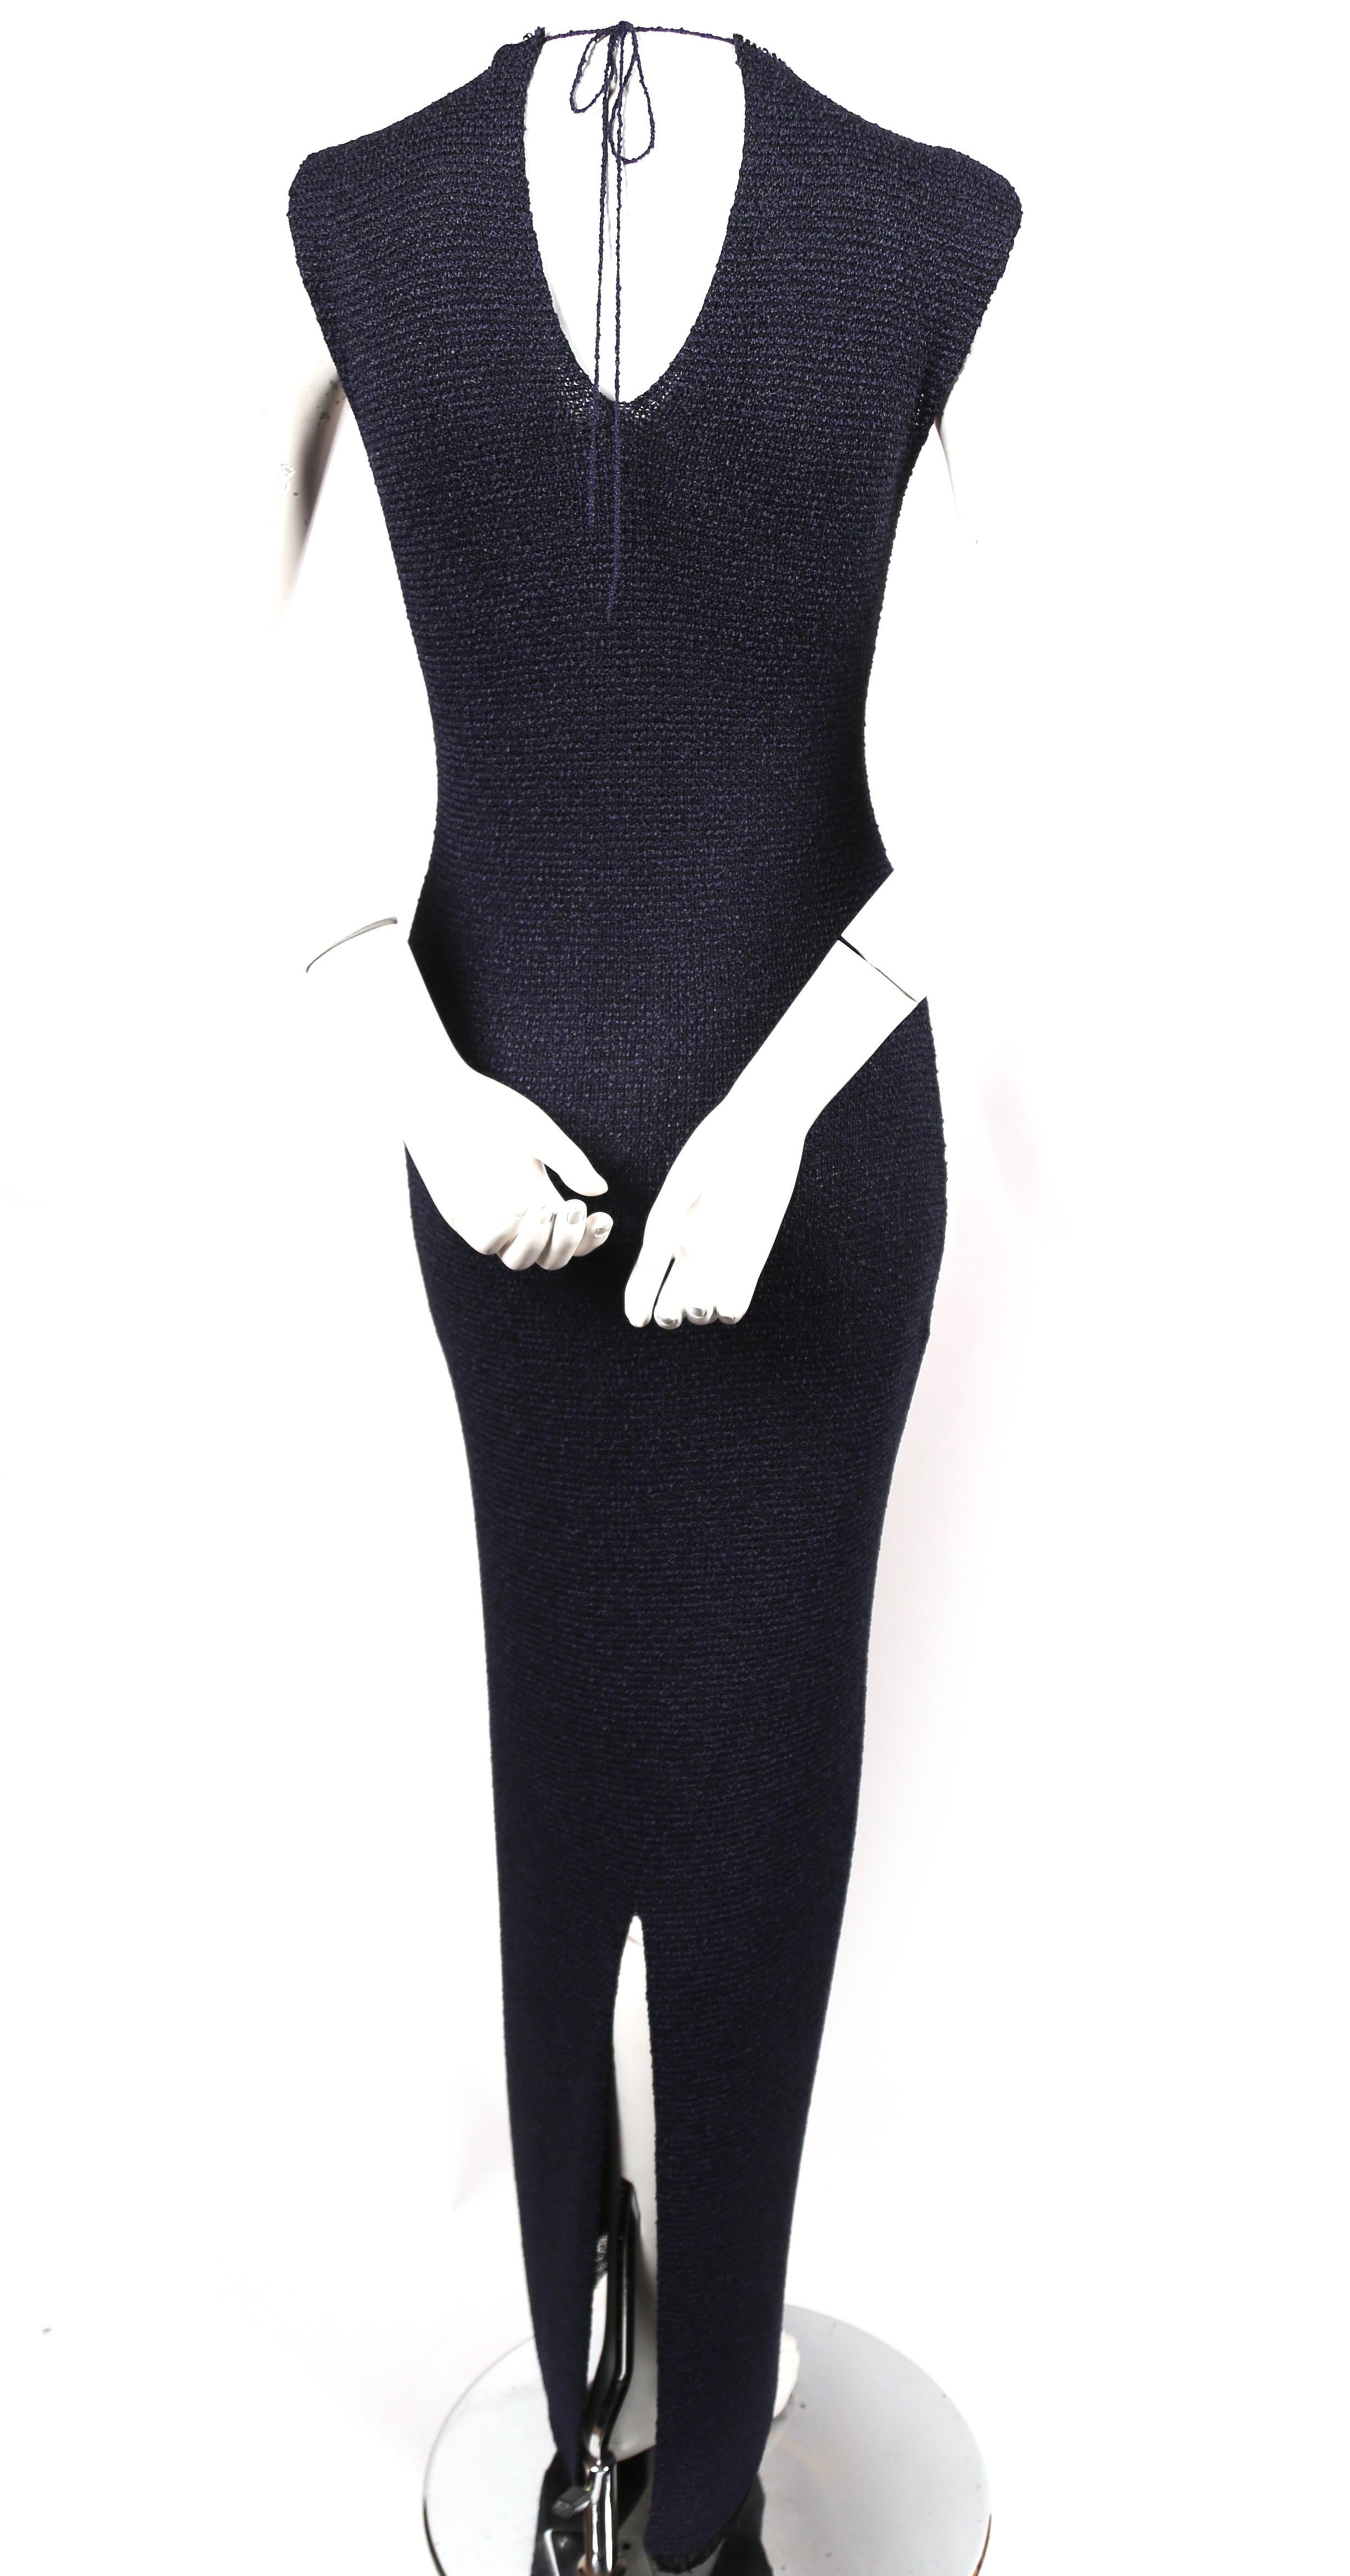 Women's CELINE by PHOEBE PHILO navy and black knit dress